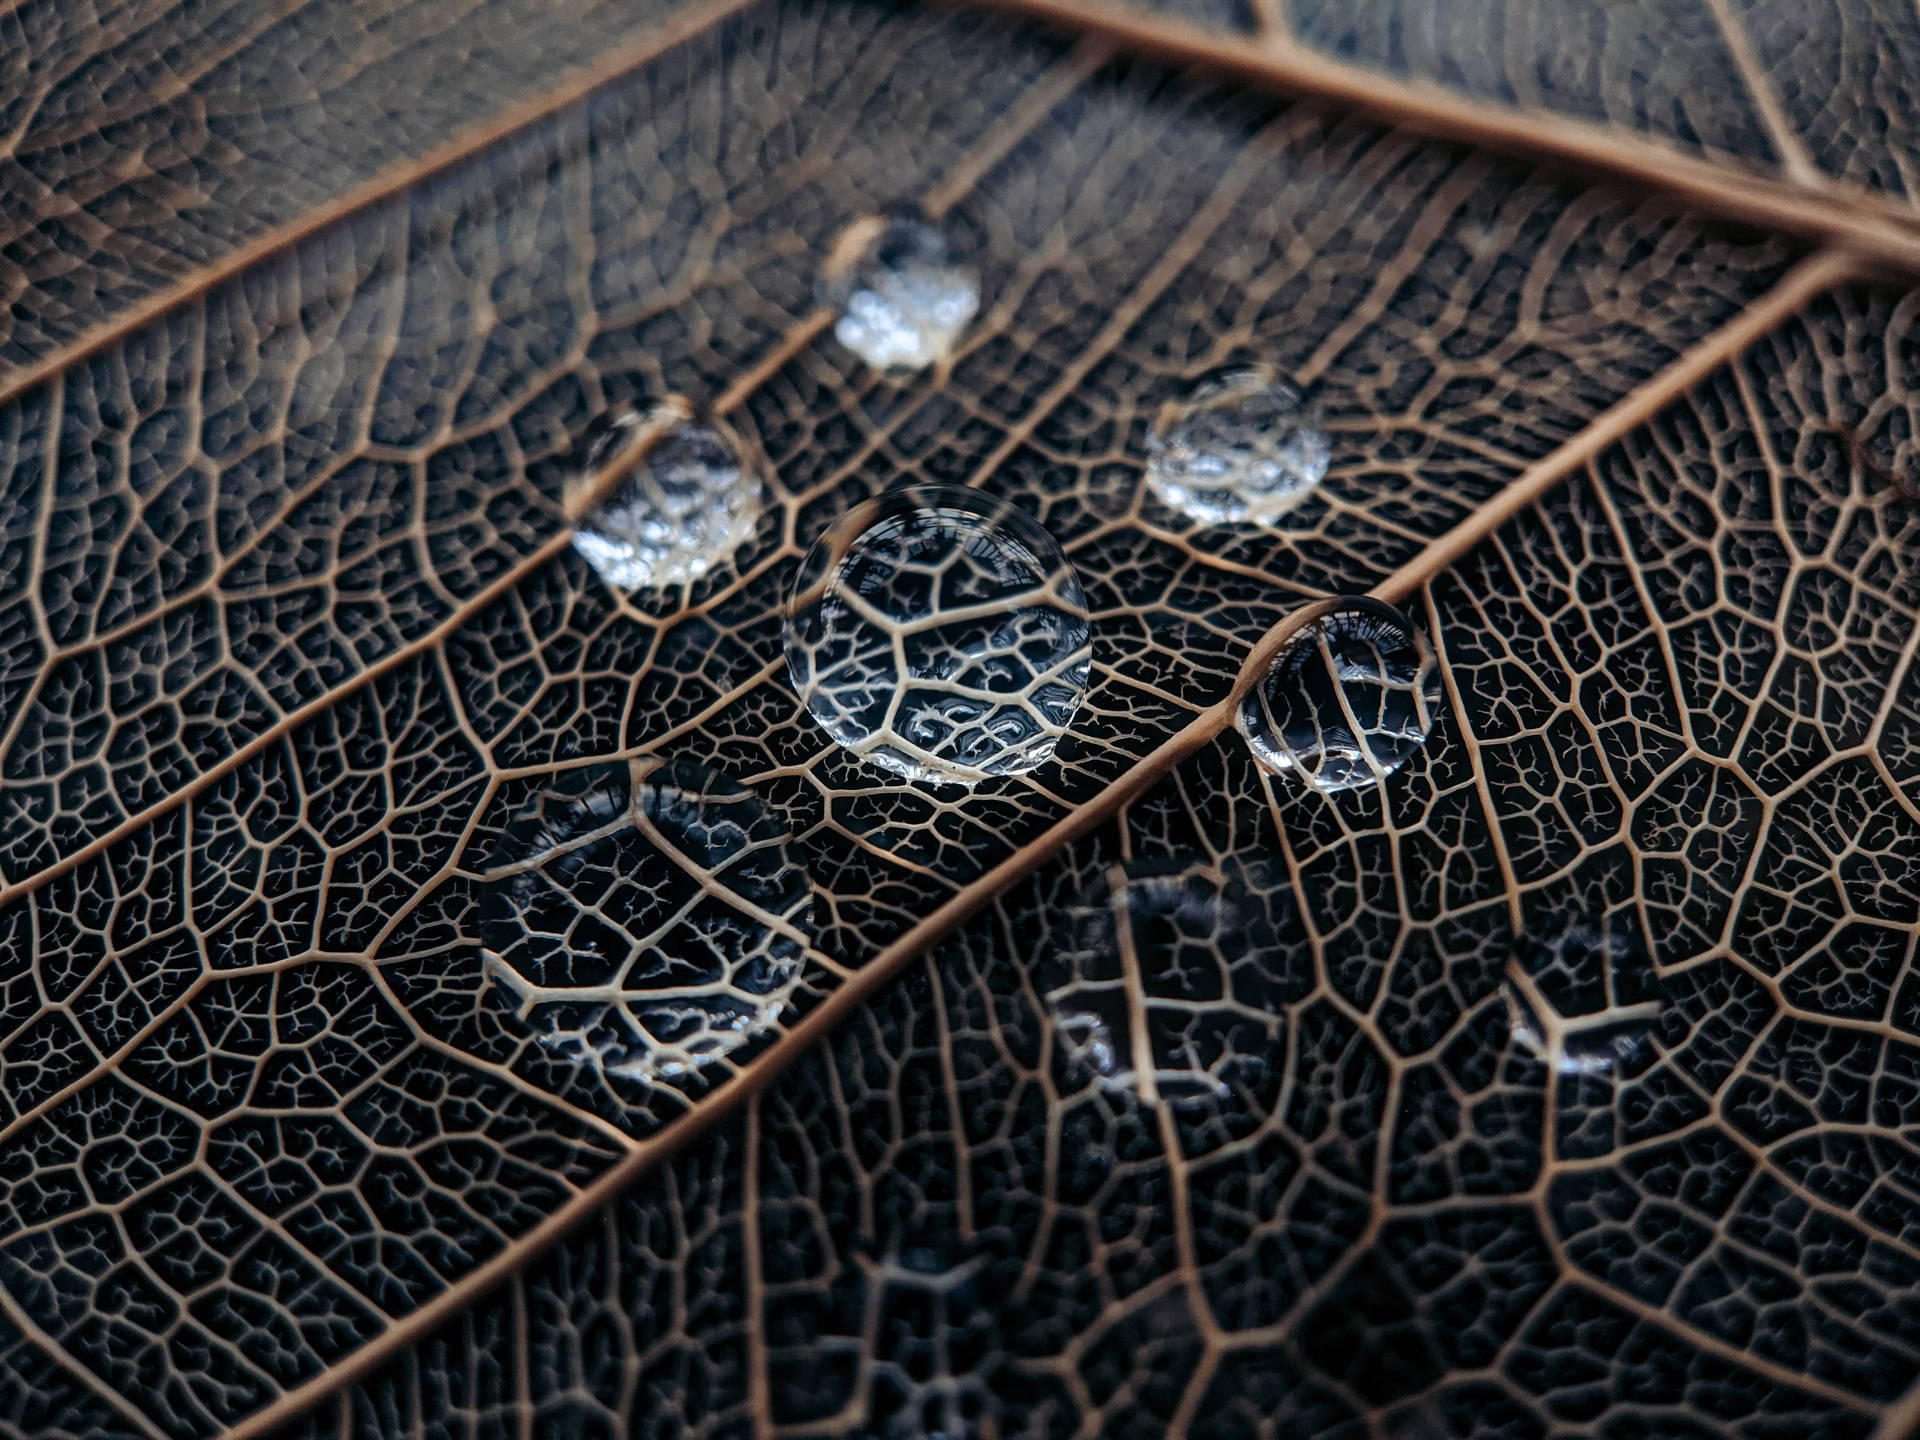 Water Droplets On Leaf Background